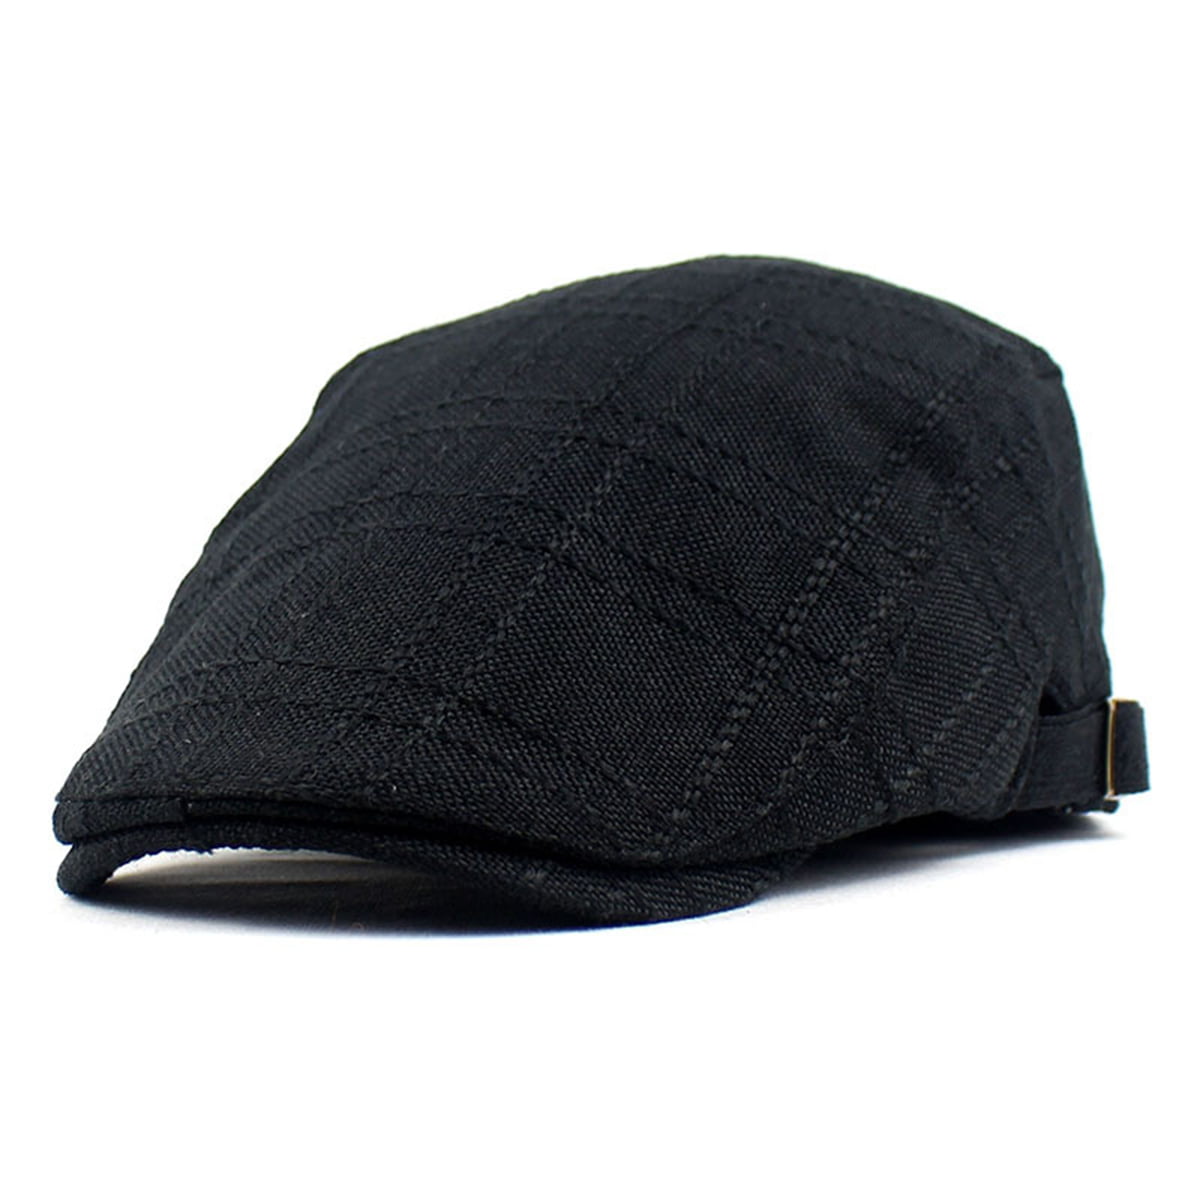 GESDY Unisex Newsboy Caps Flat Ivy Cabbie Driving Hats Casual Outdoor Herringbone Beret Hat 